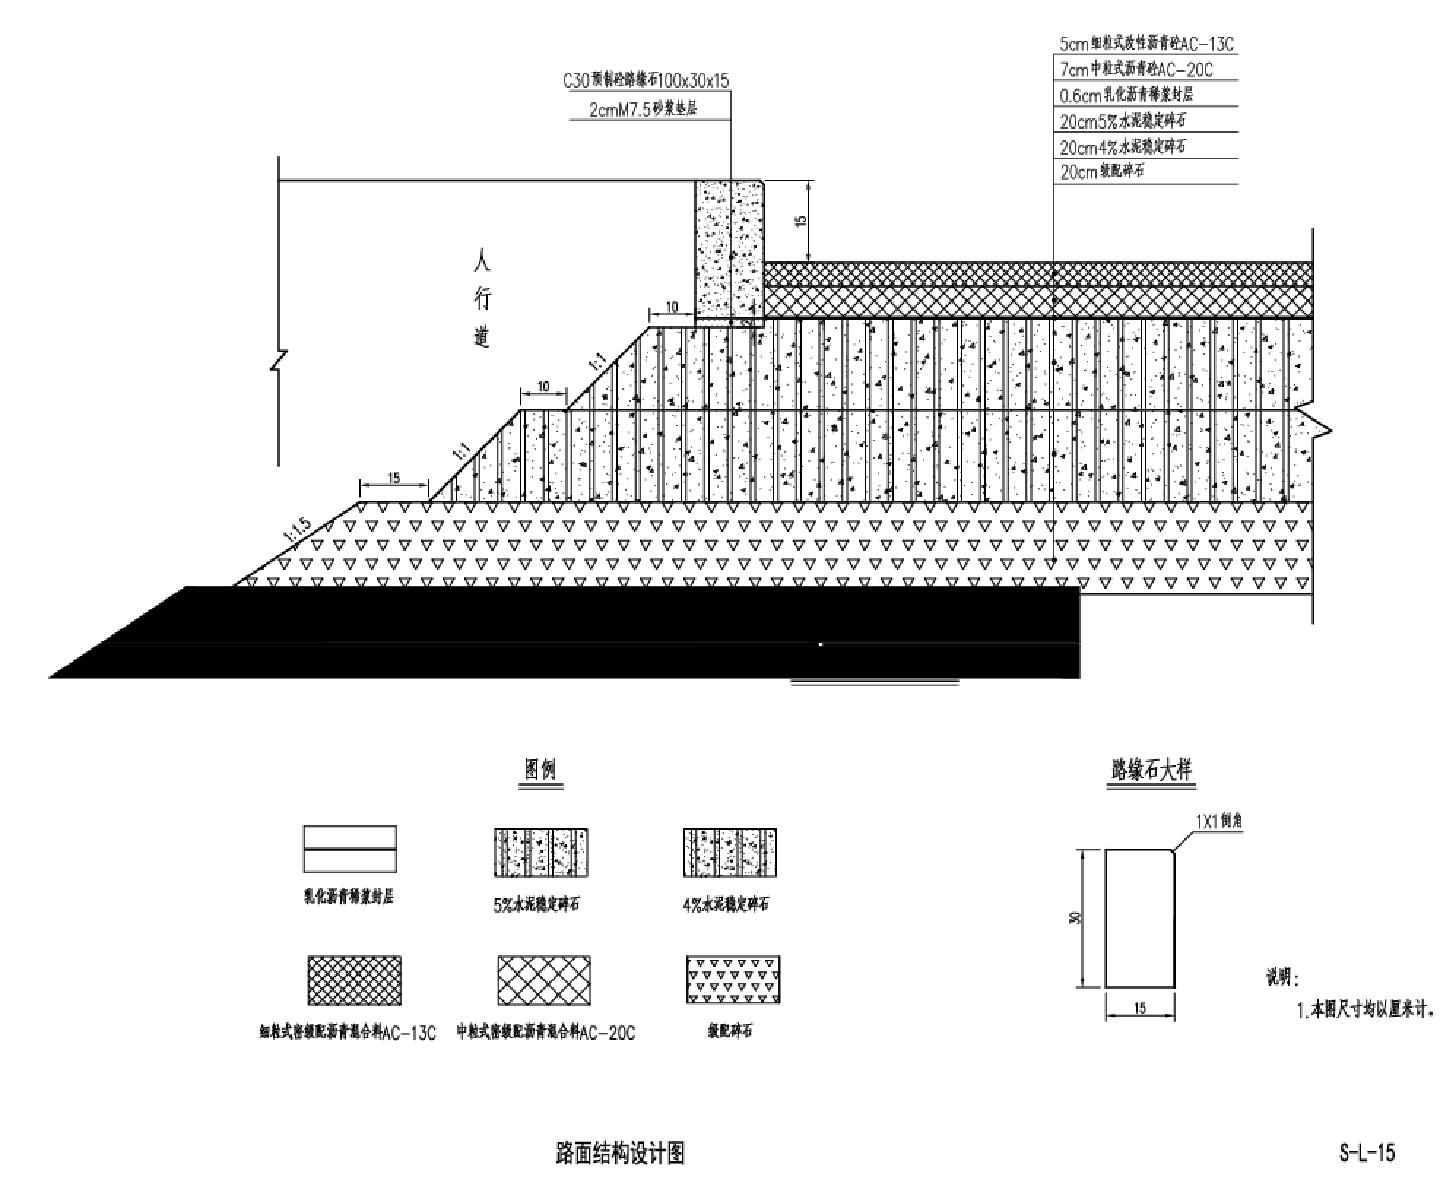 S-L-15路面结构设计图CAD图.dwg